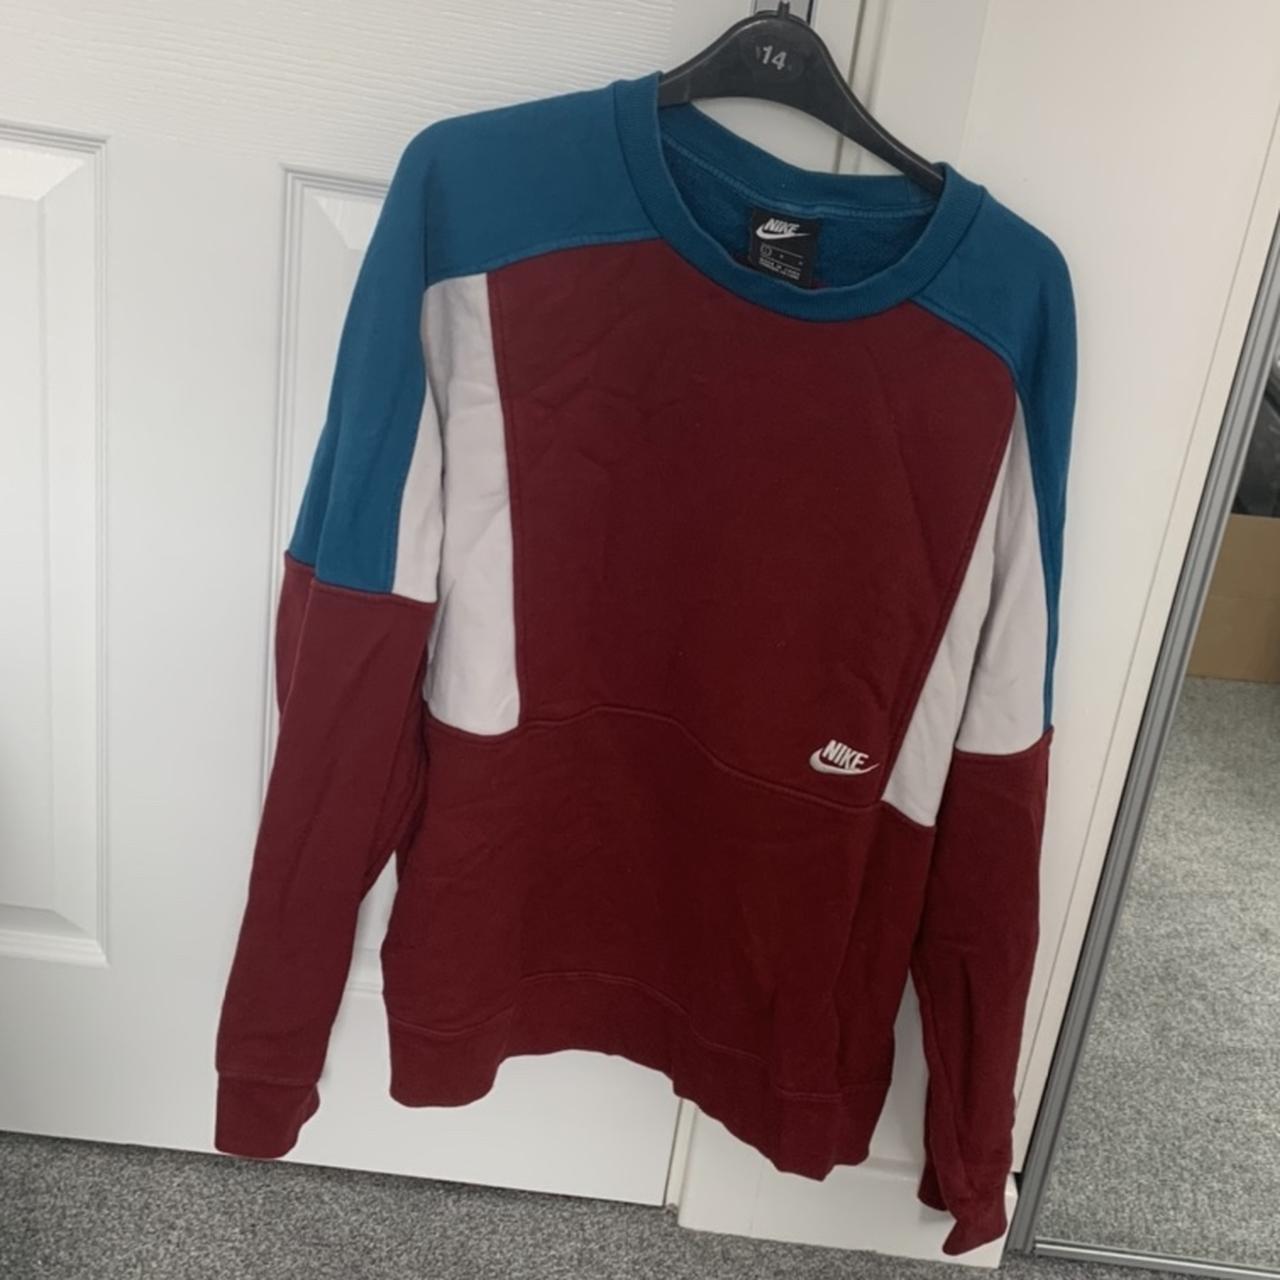 nike red white and blue sweatshirt